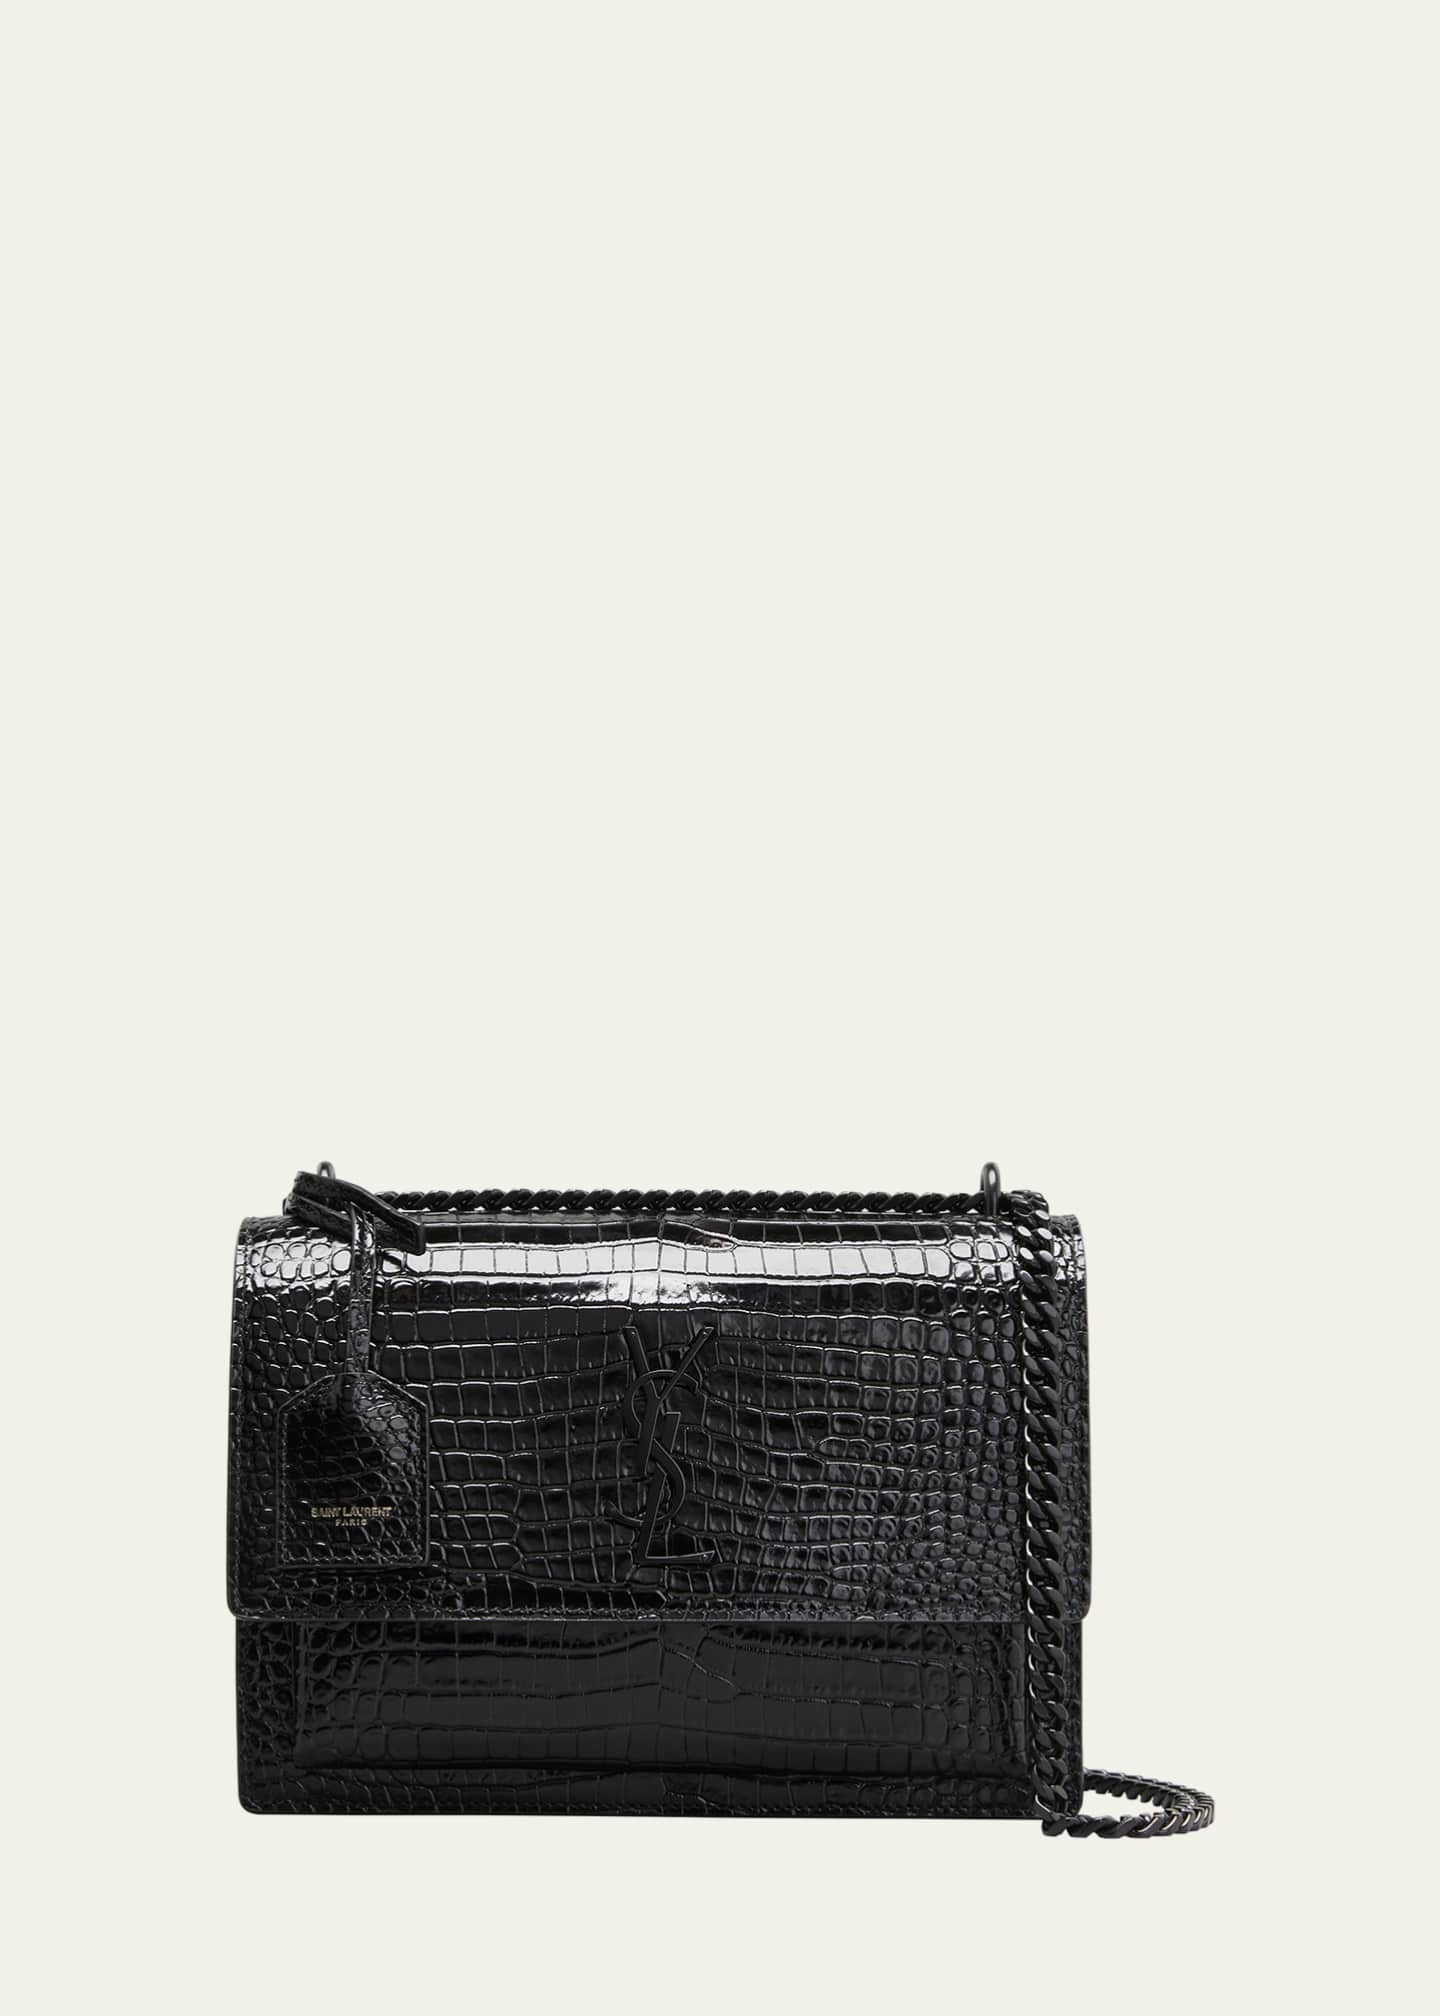 Sunset Medium Monogram YSL Croc-Embossed Shoulder Bag